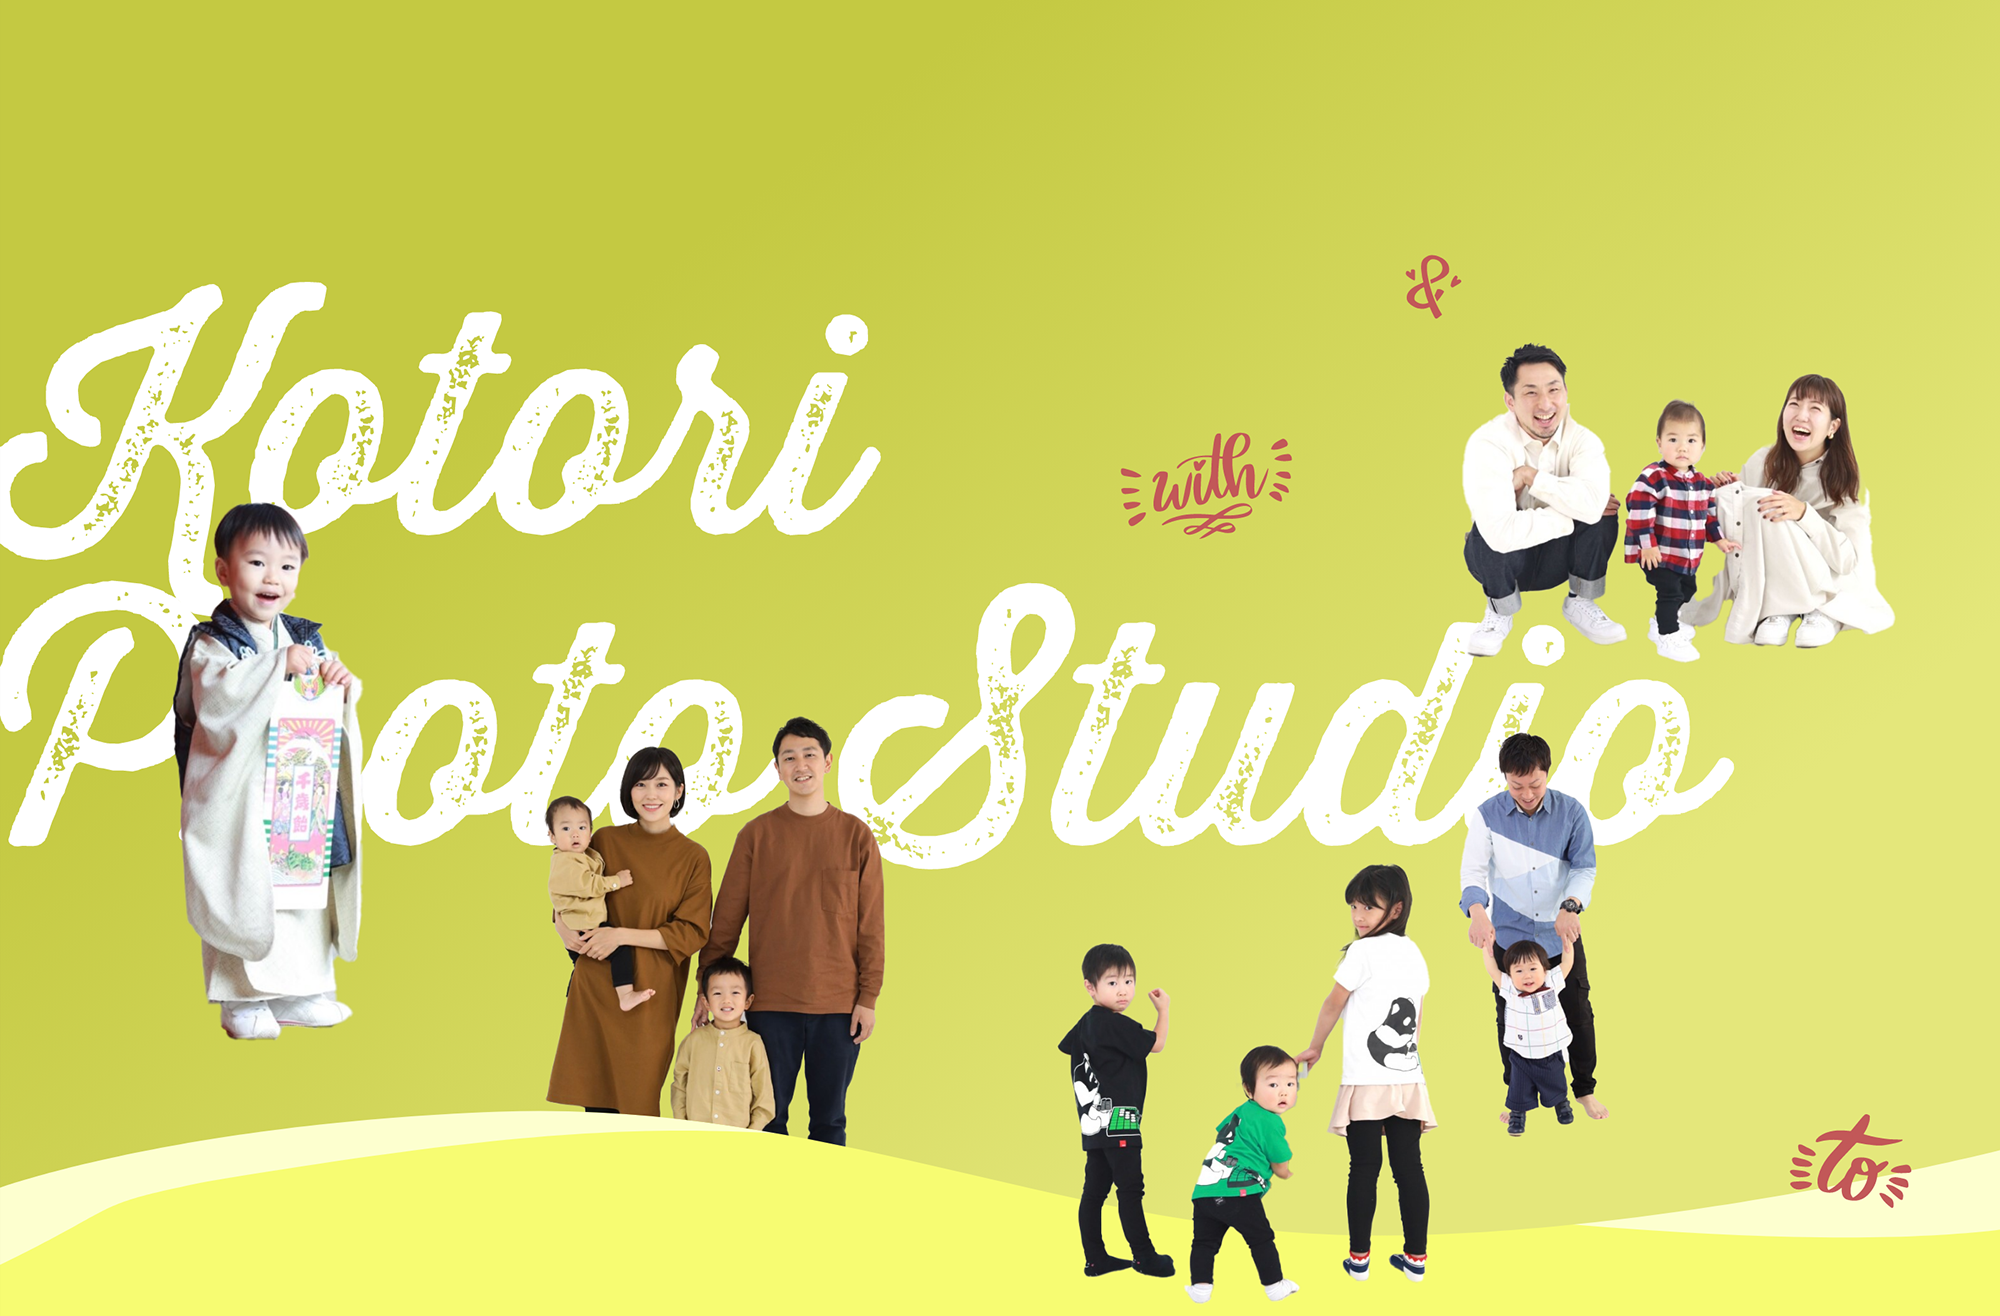 Kotori Photo Studio